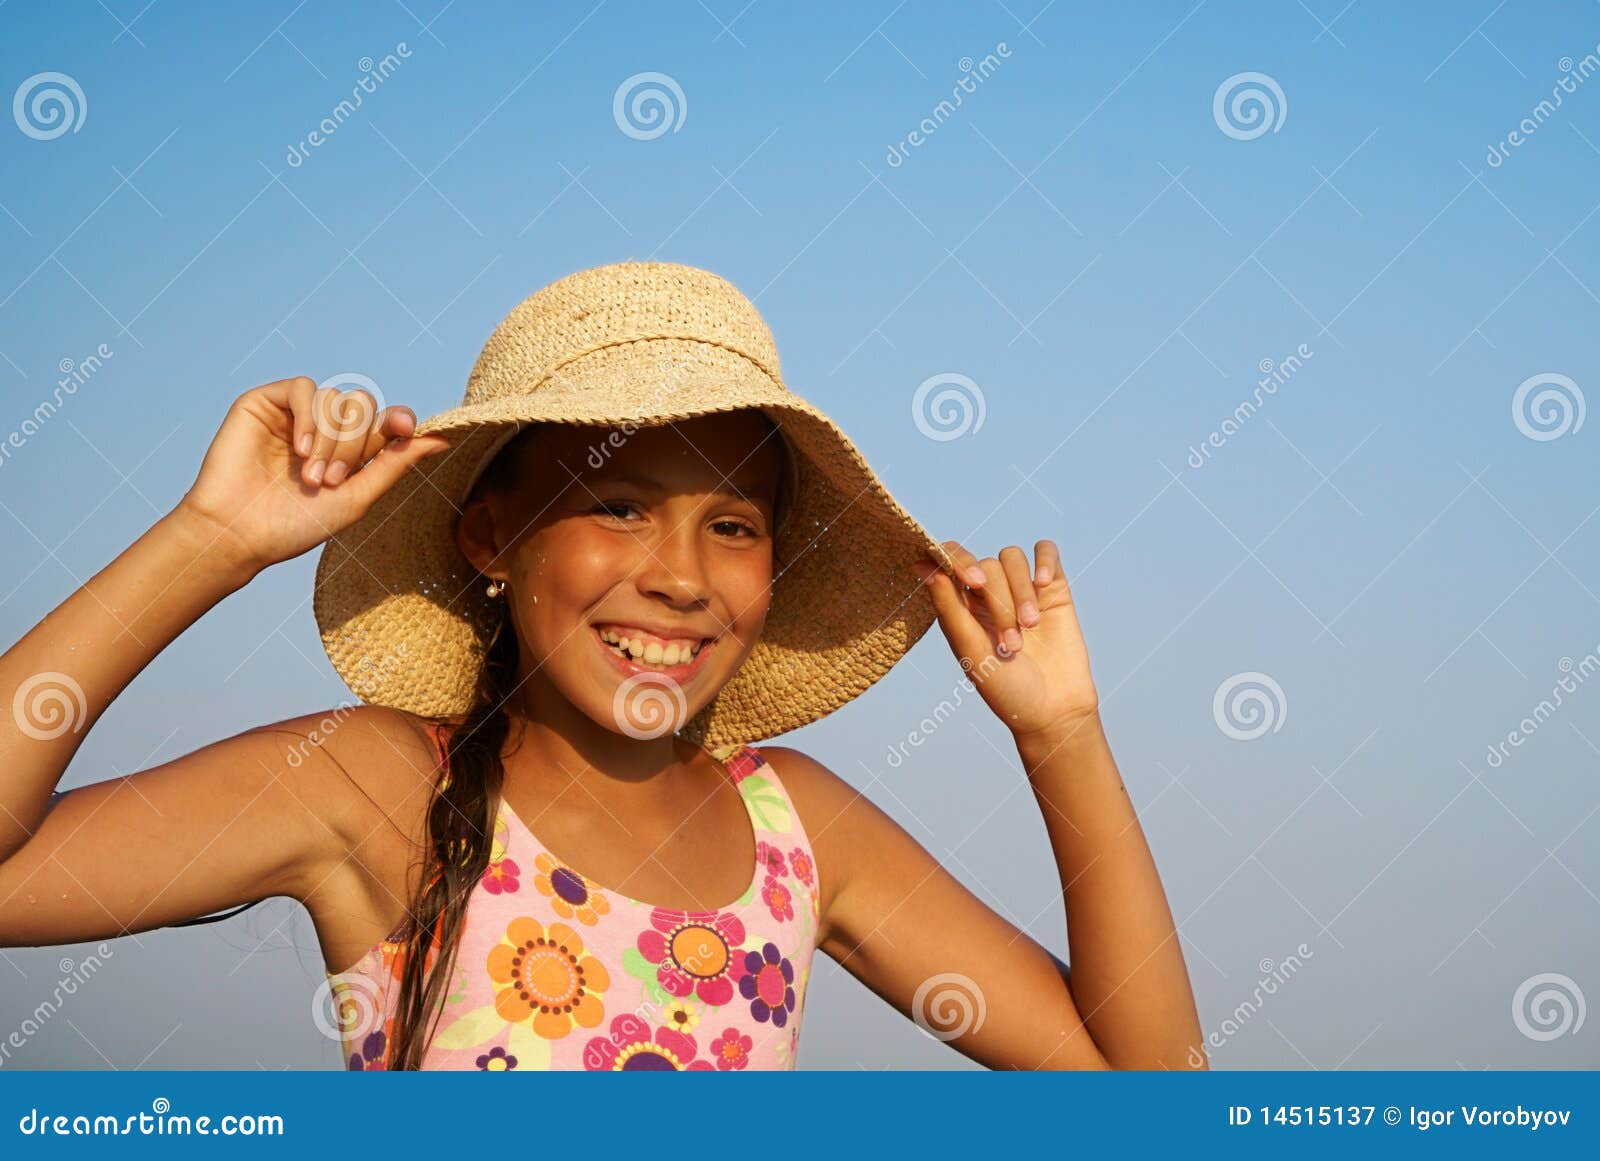 Preteen Girl On Sea Beach Royalty Free Stock Photography 